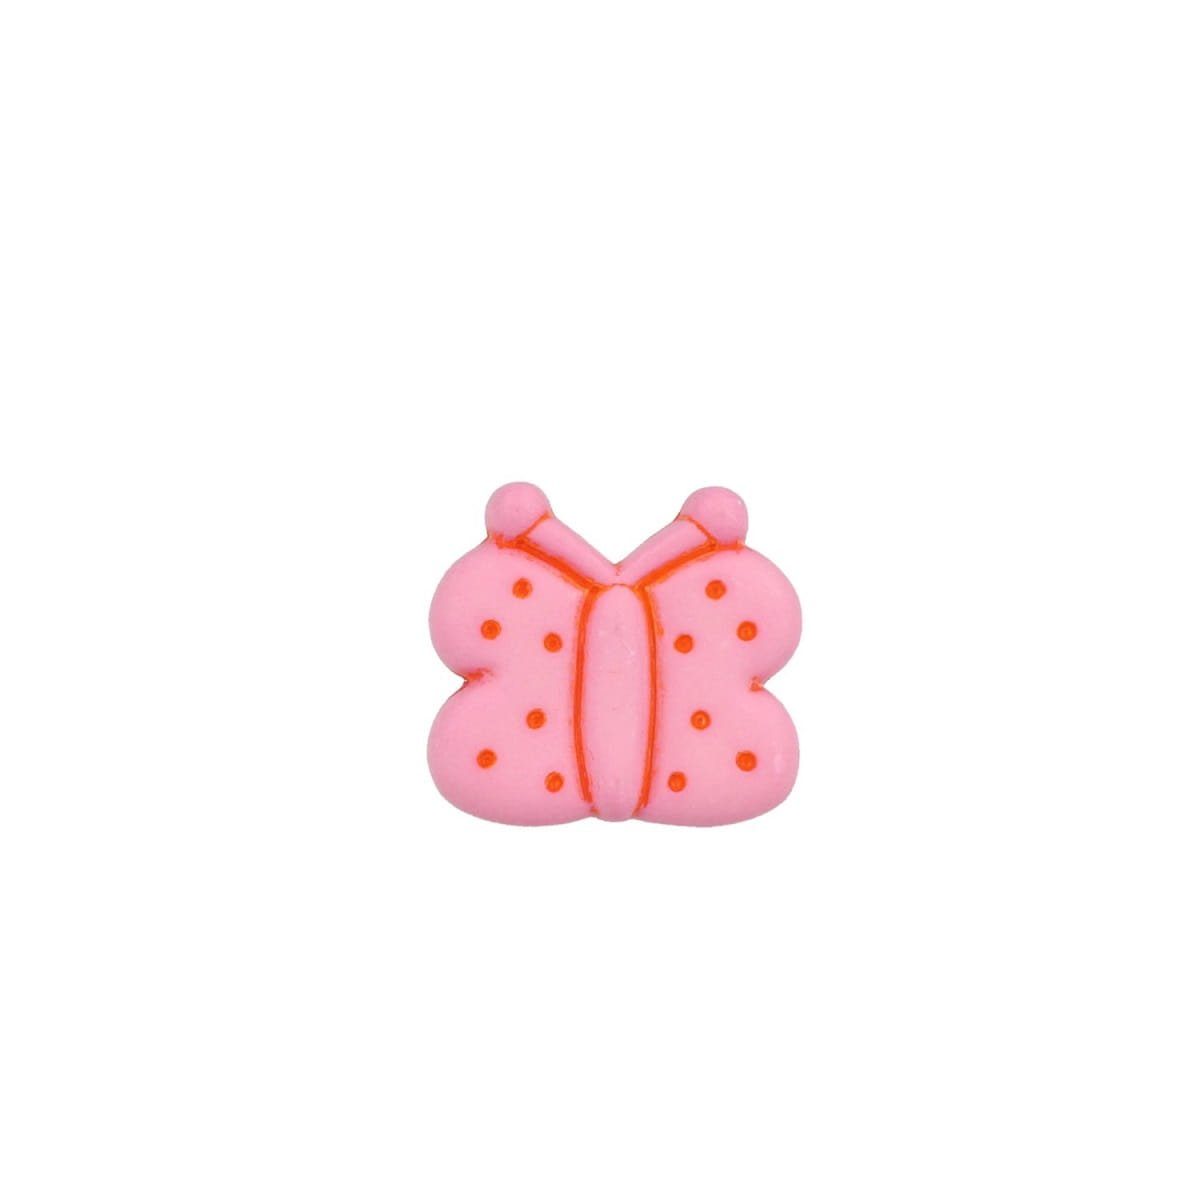 MS Beschläge Türbeschlag Möbelknopf Kinderzimmerknopf Schrankknopf Rosa Schmetterling Kommodenk